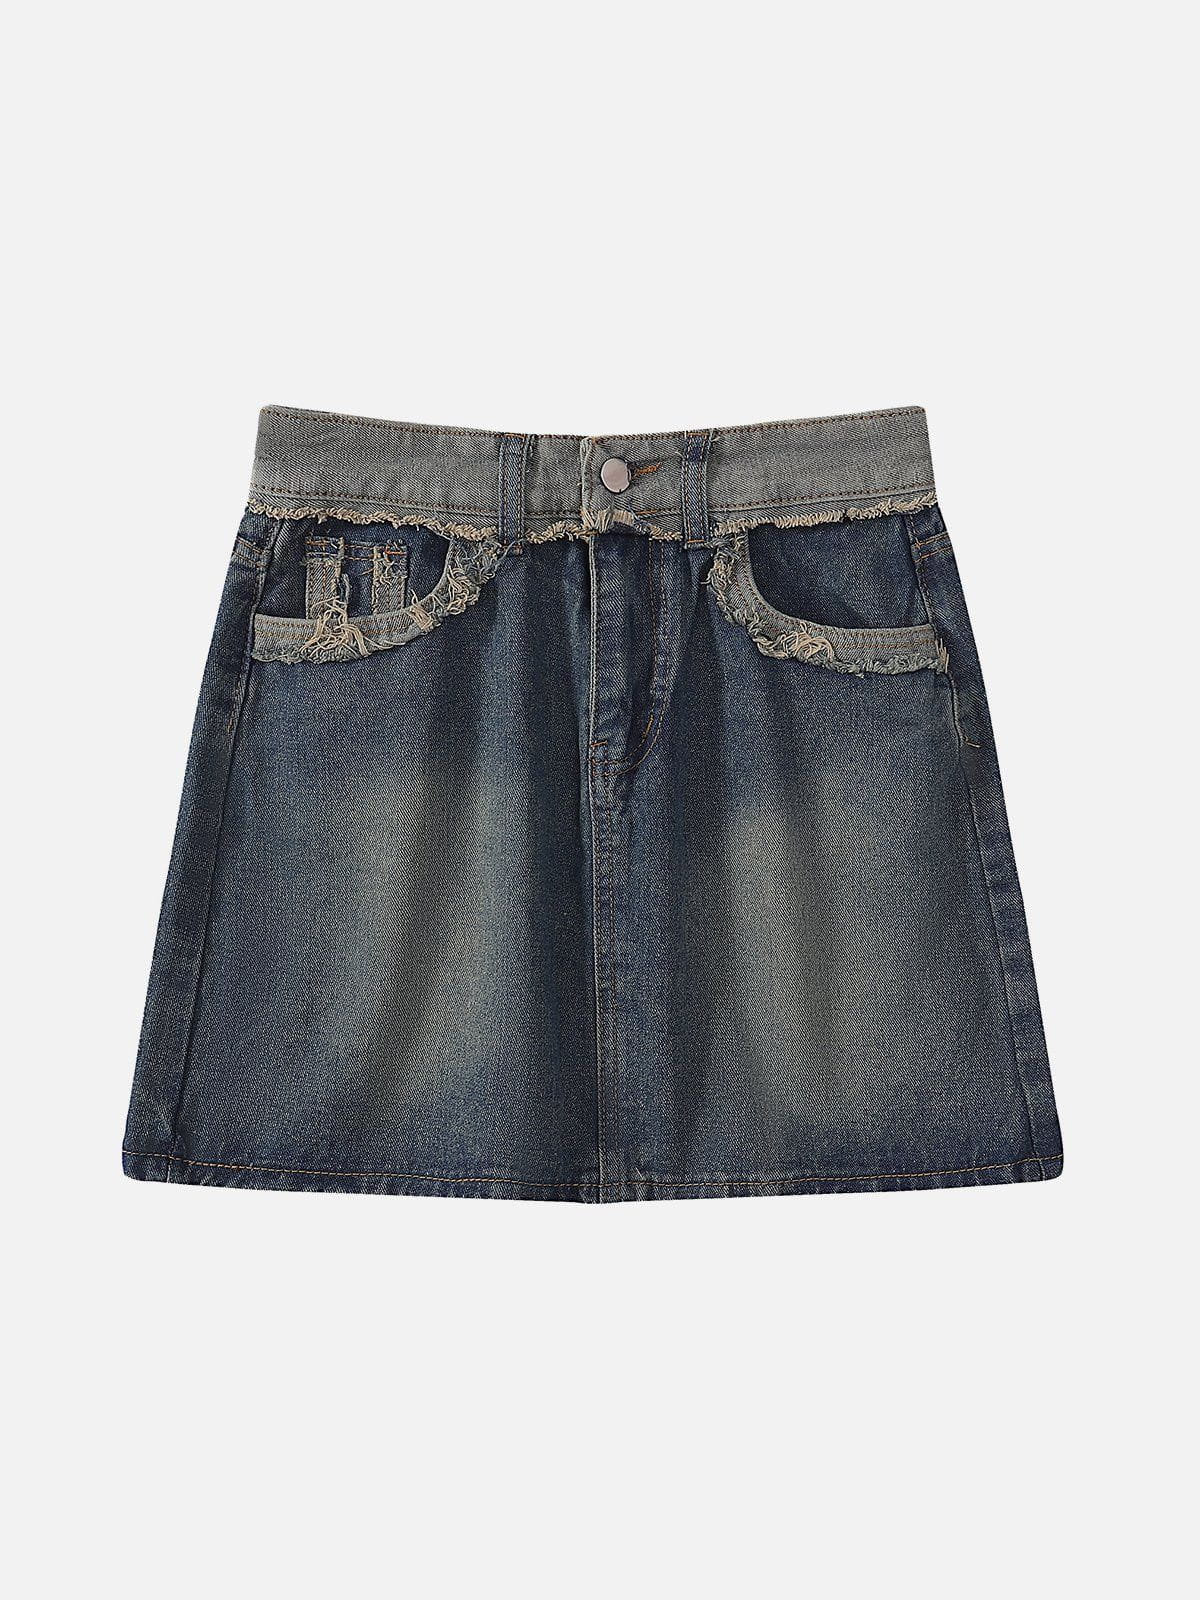 Vintage Raw Denim Skirt